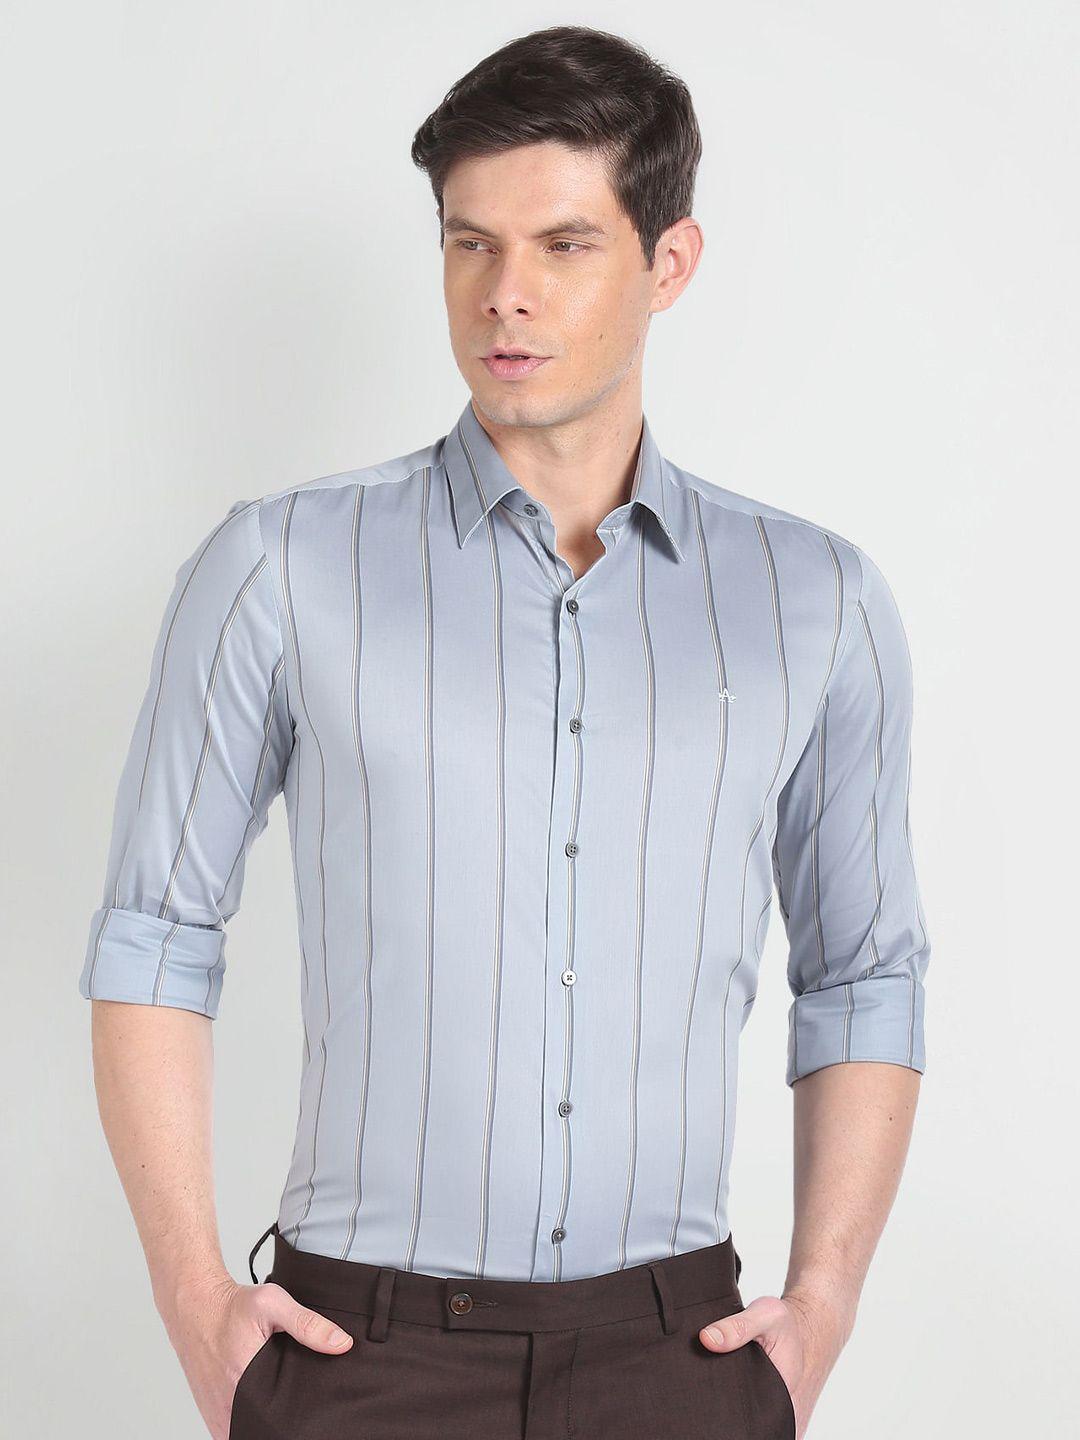 arrow new york slim fit vertical striped formal shirt